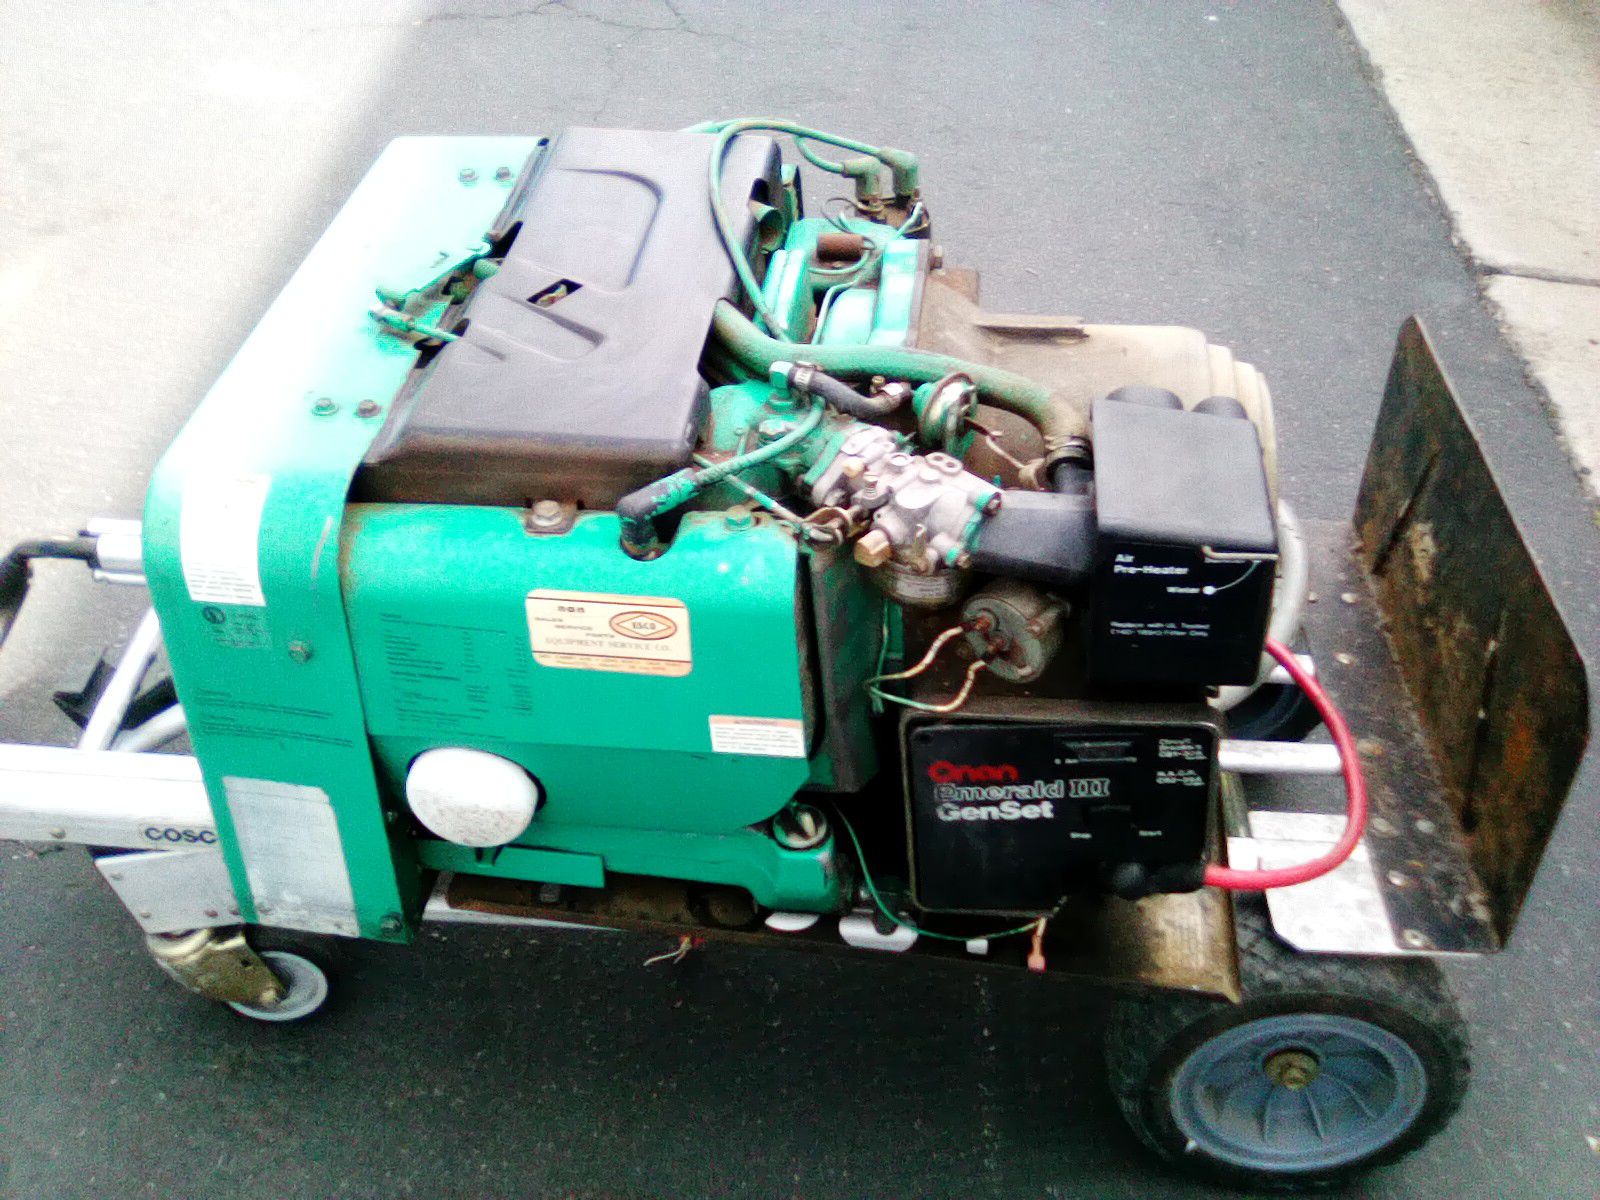 Onan emerald 3 generator for rv.